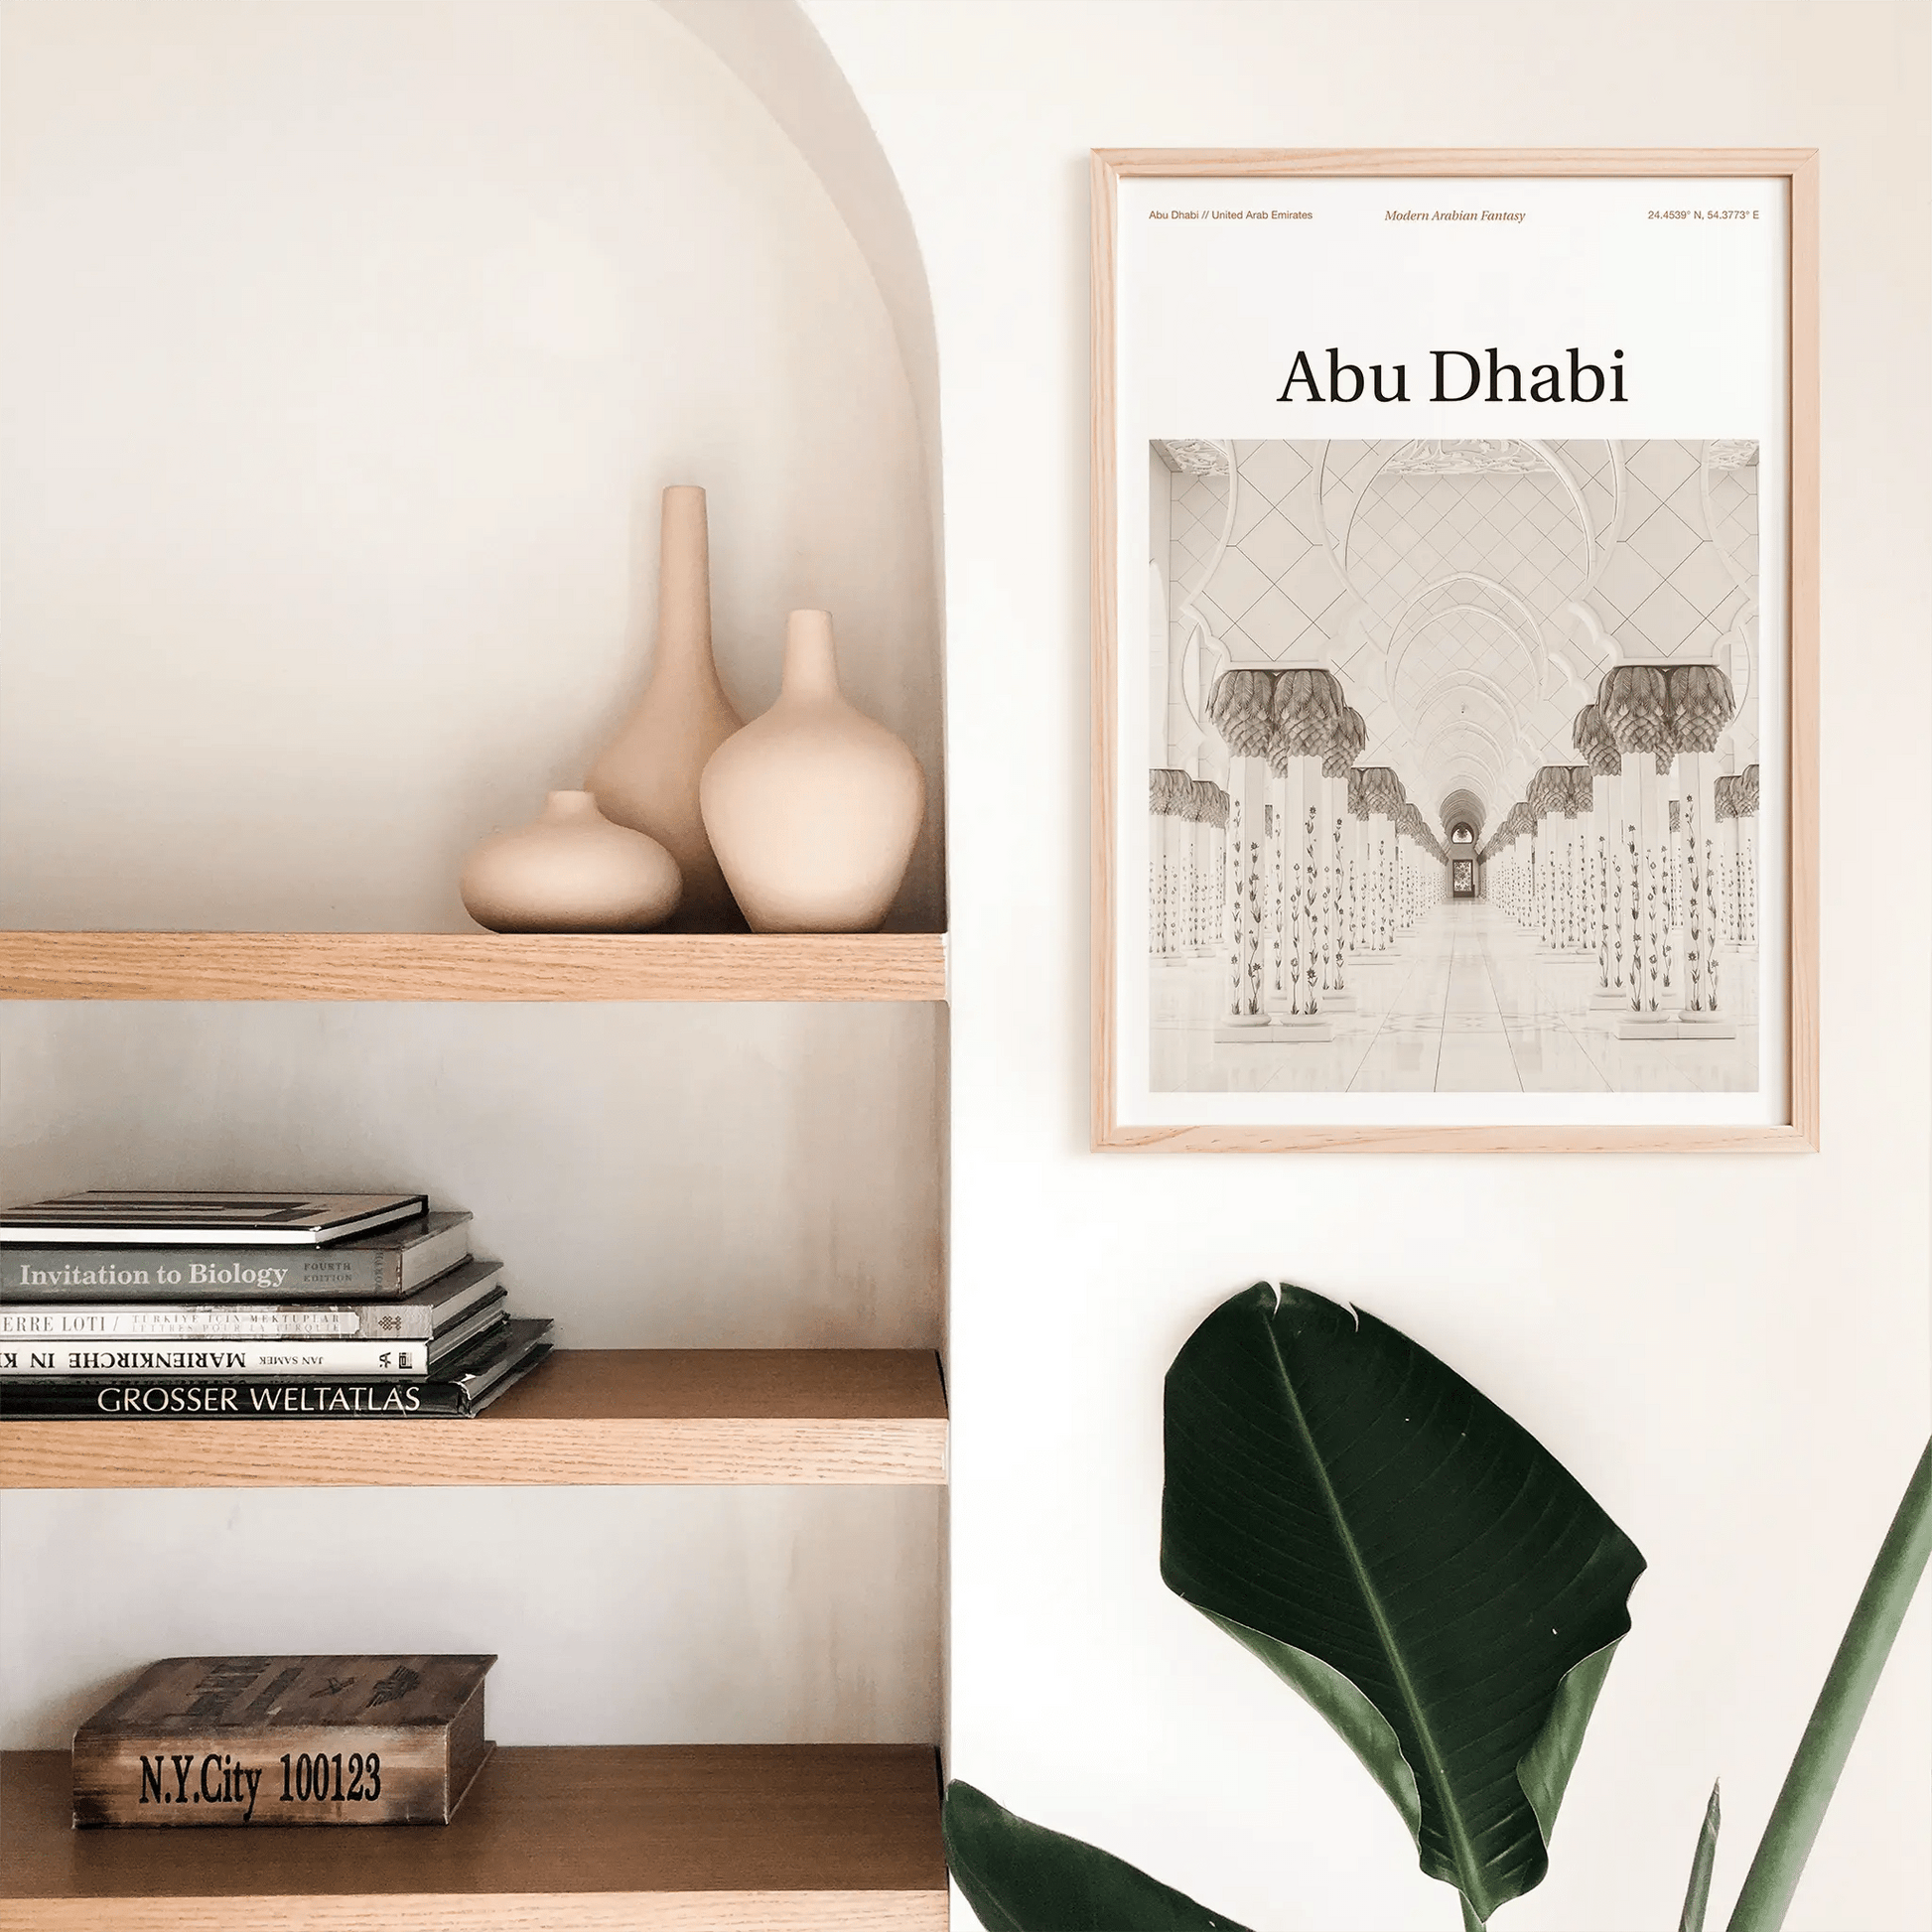 Abu Dhabi Essence Poster - The Globe Gallery